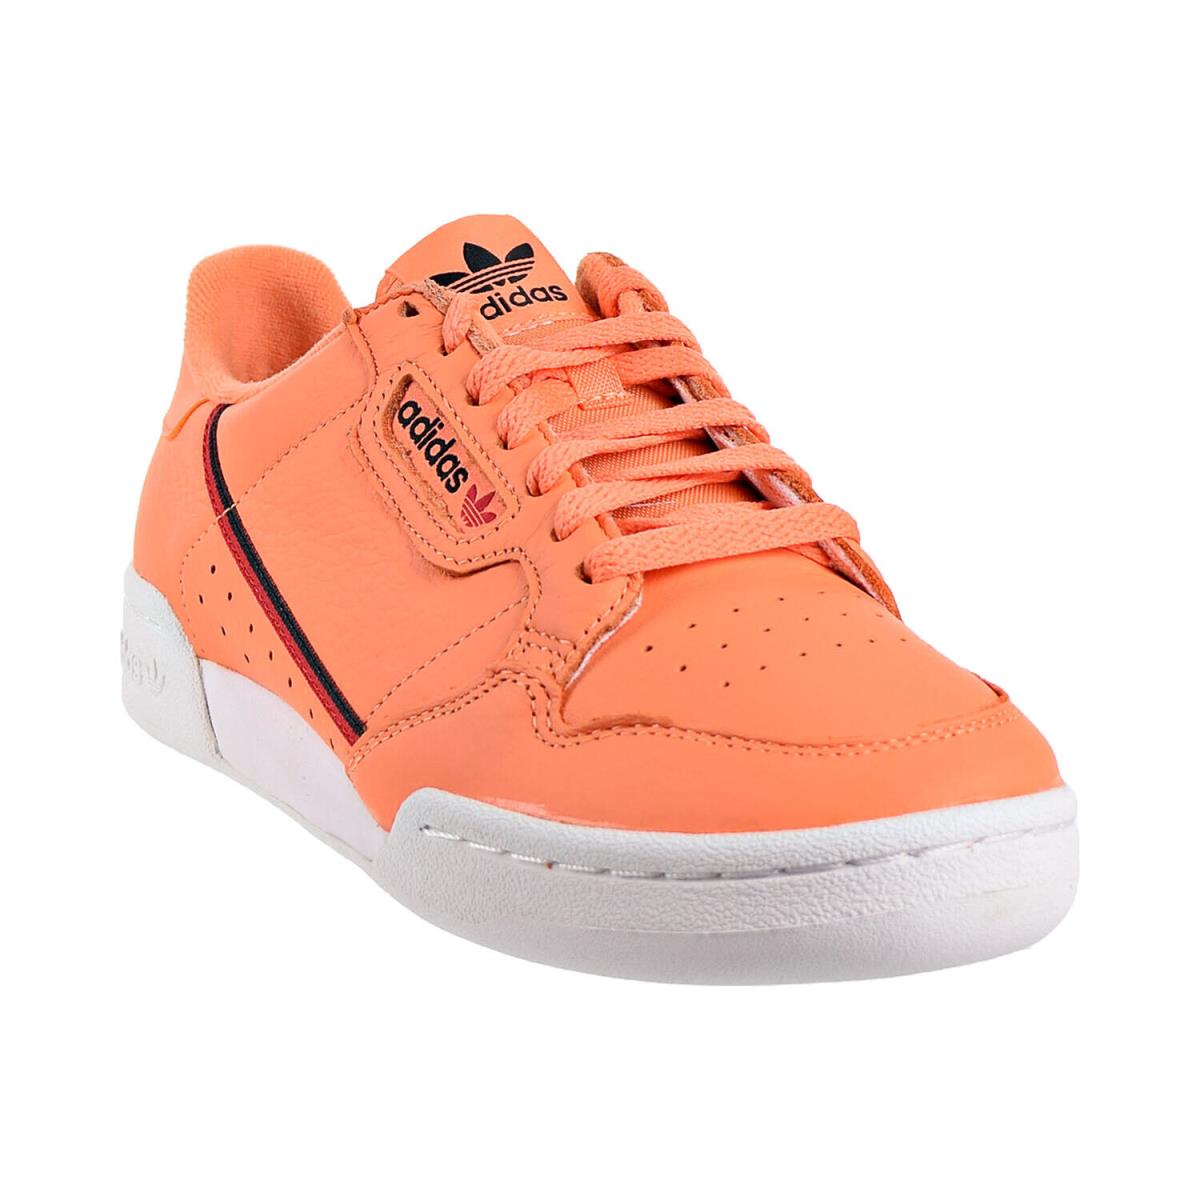 Adidas Continental 80 Mens Shoes Easy Orange-core Black-scarlet CG7124